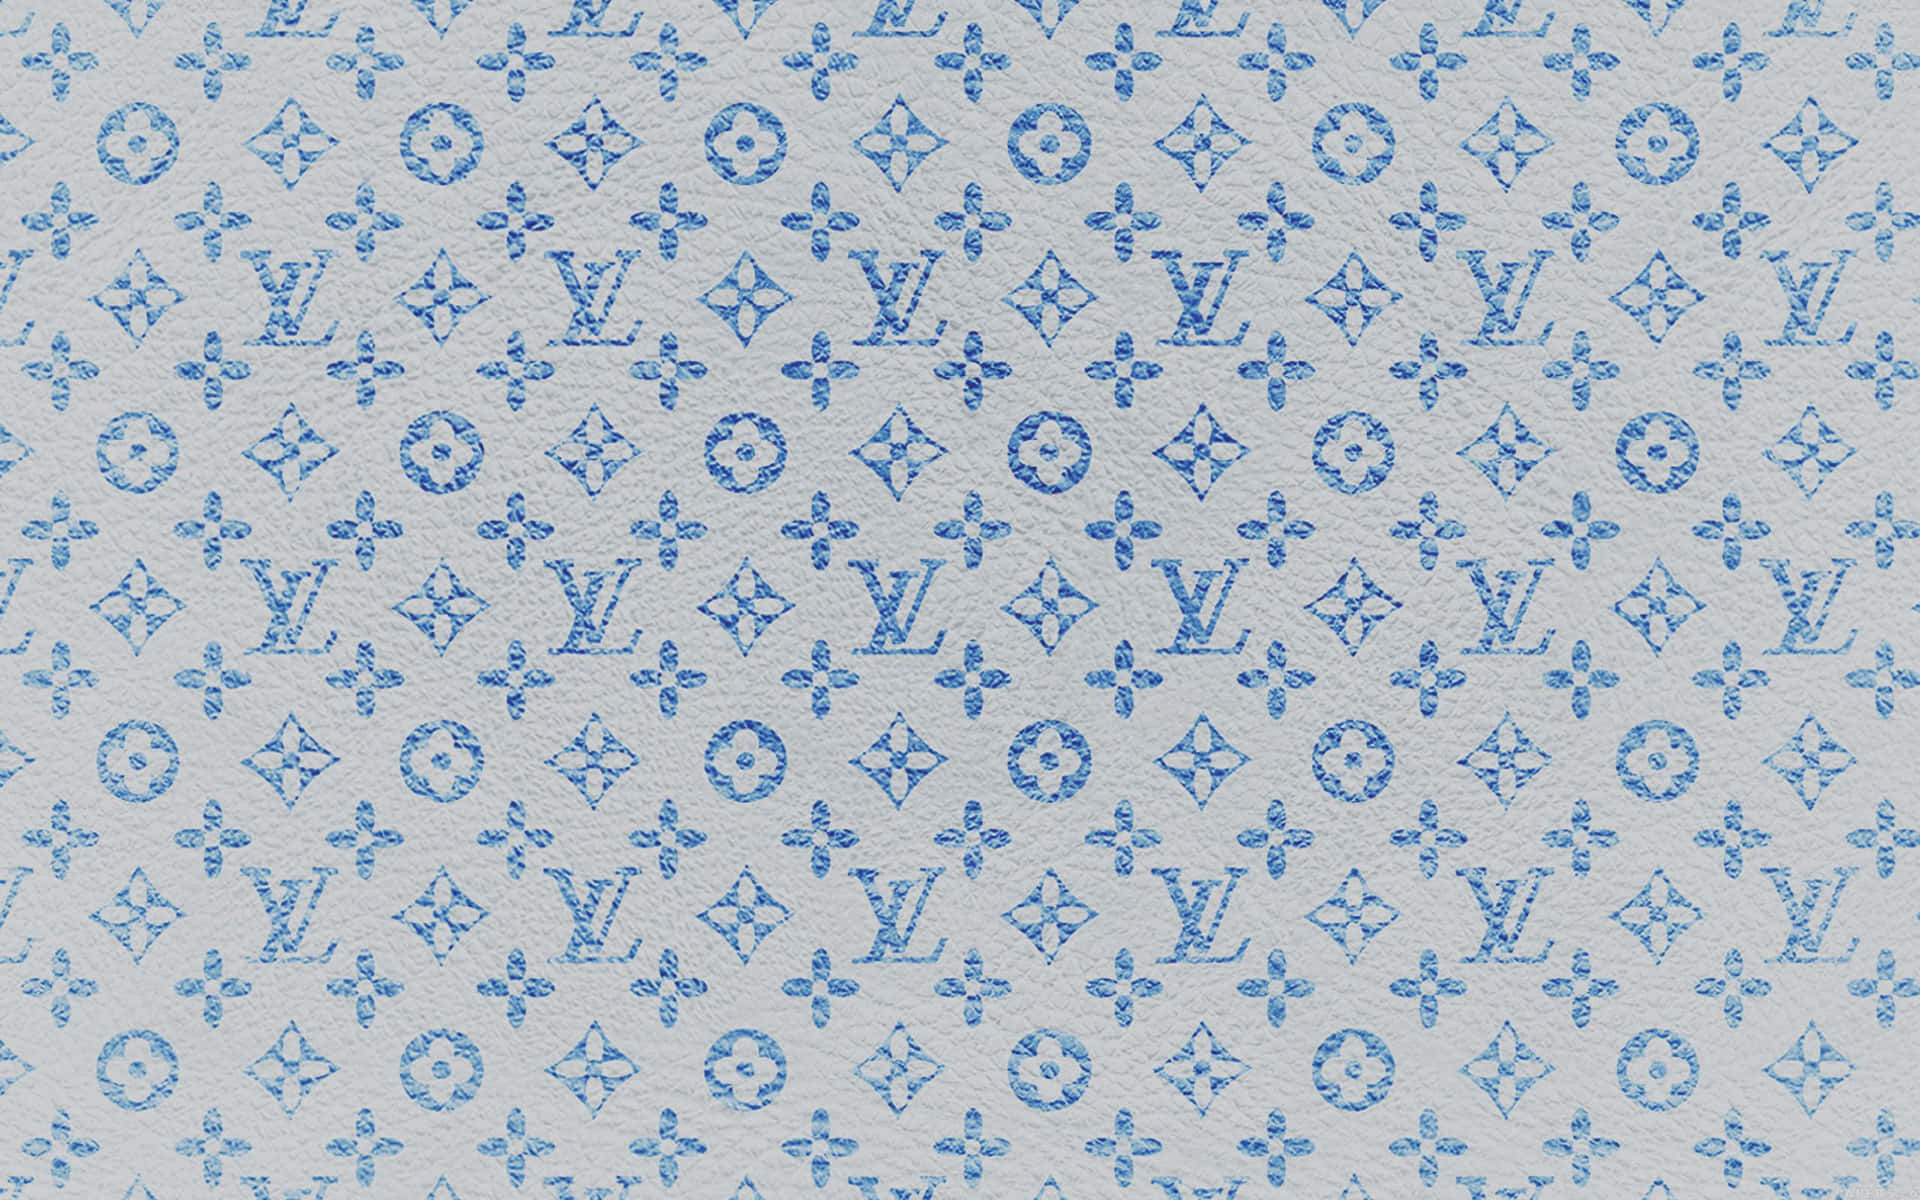 Luxuriöselouis Vuitton Blau Wallpaper